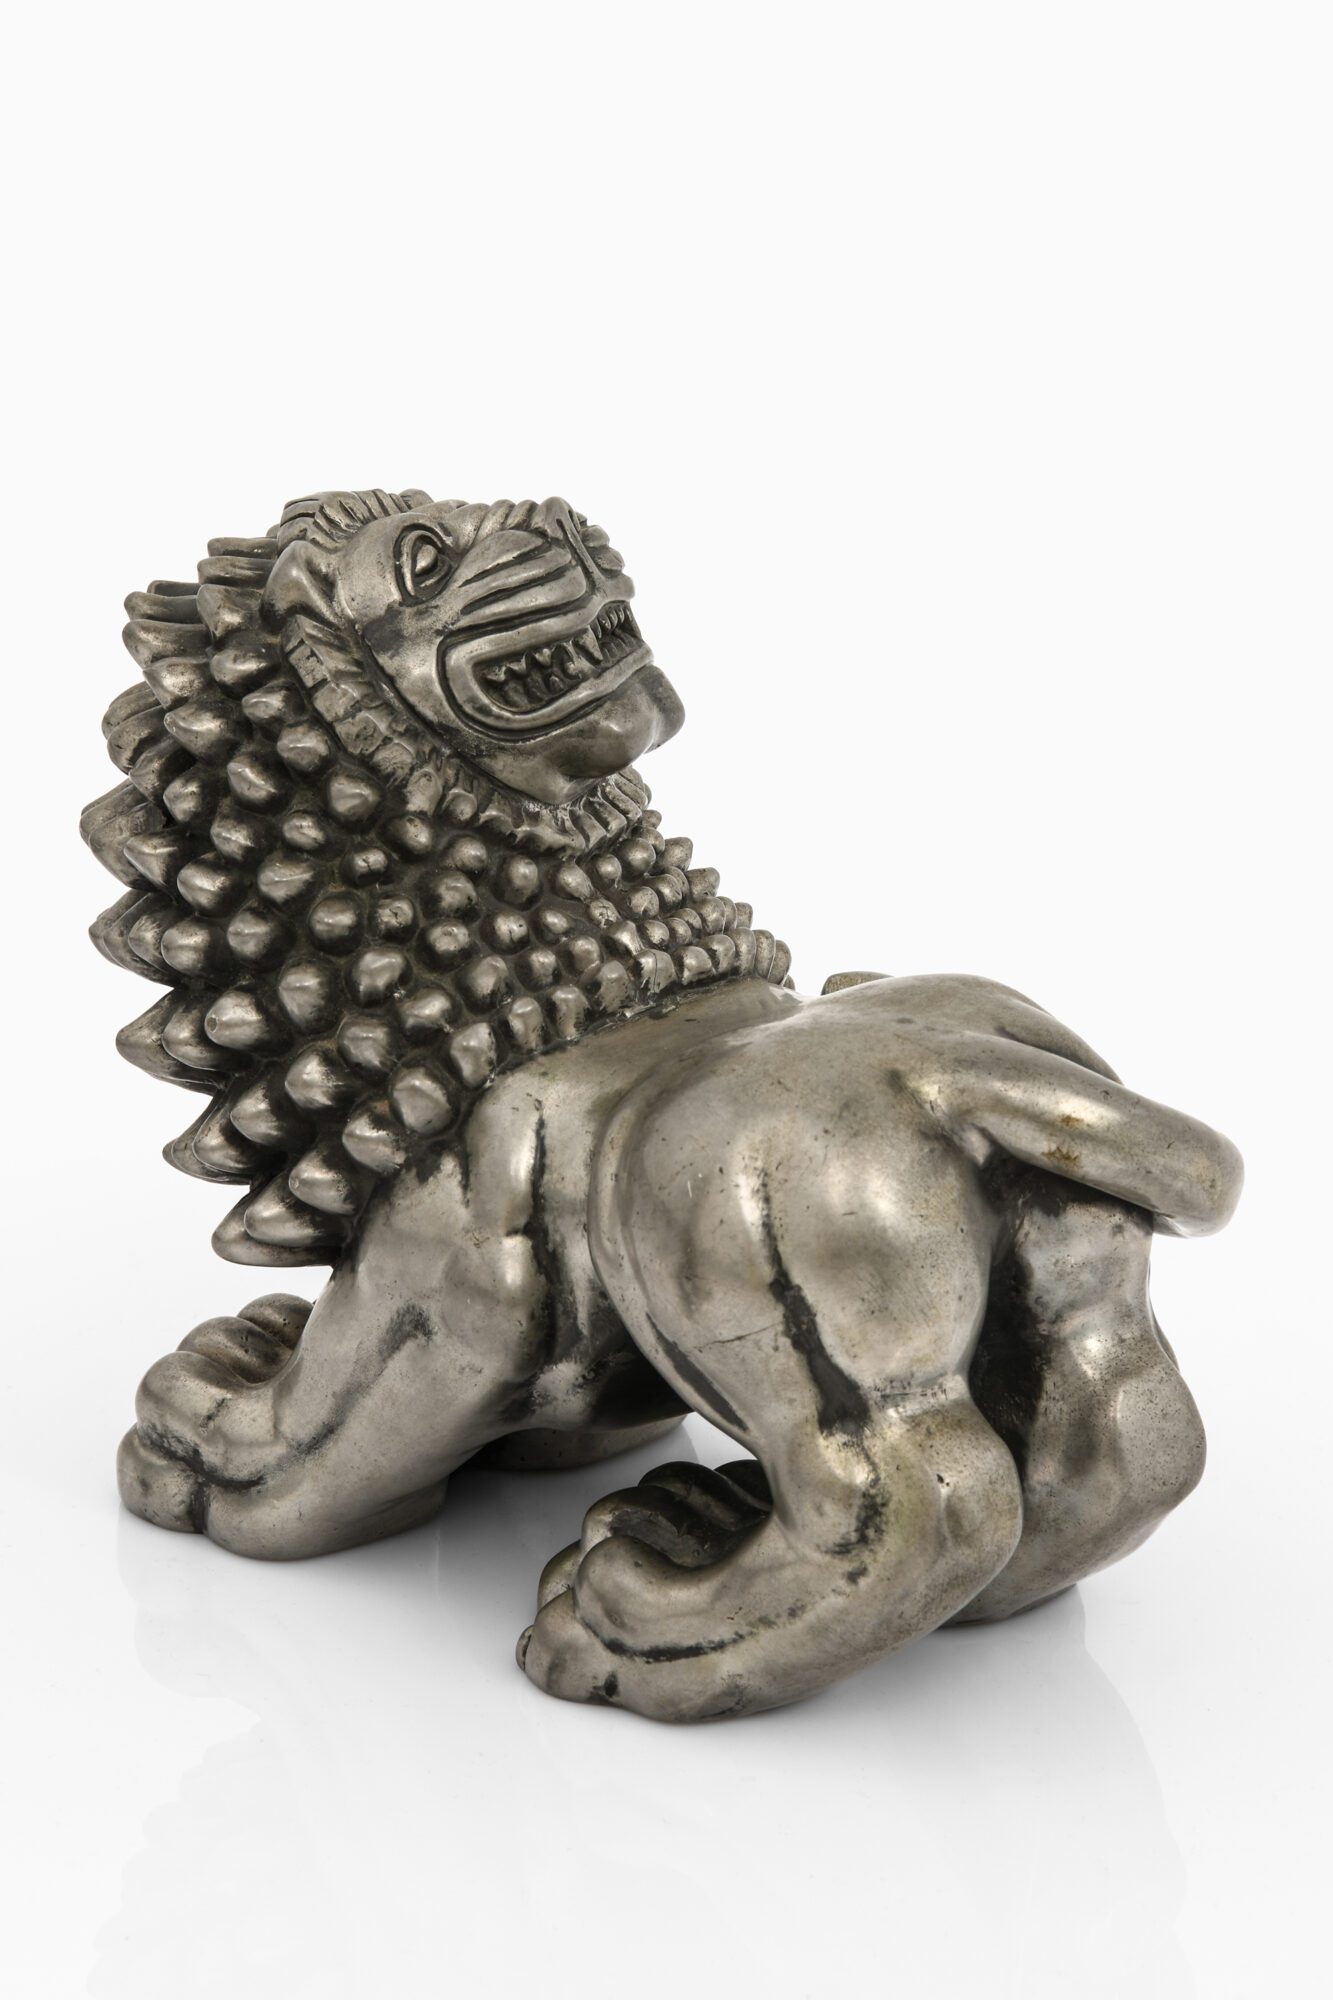 Anna Petrus lion sculpture in pewter at Studio Schalling